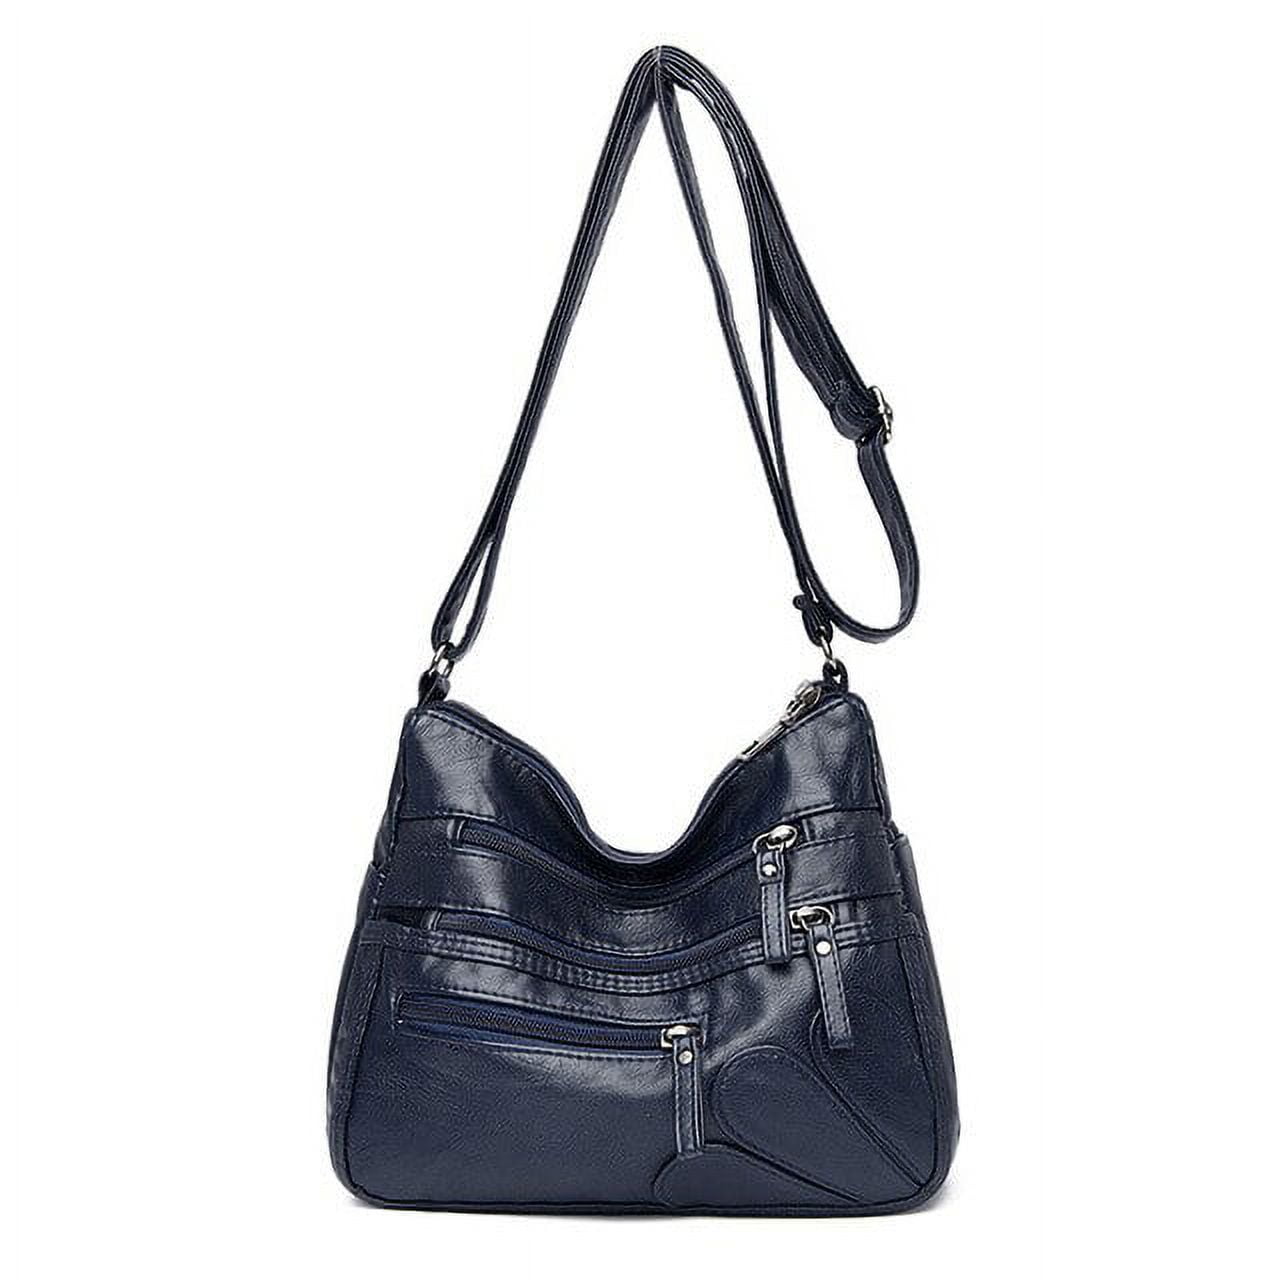 Stone Mountain Black Leather Handbag Shoulder Bag Purse - $28